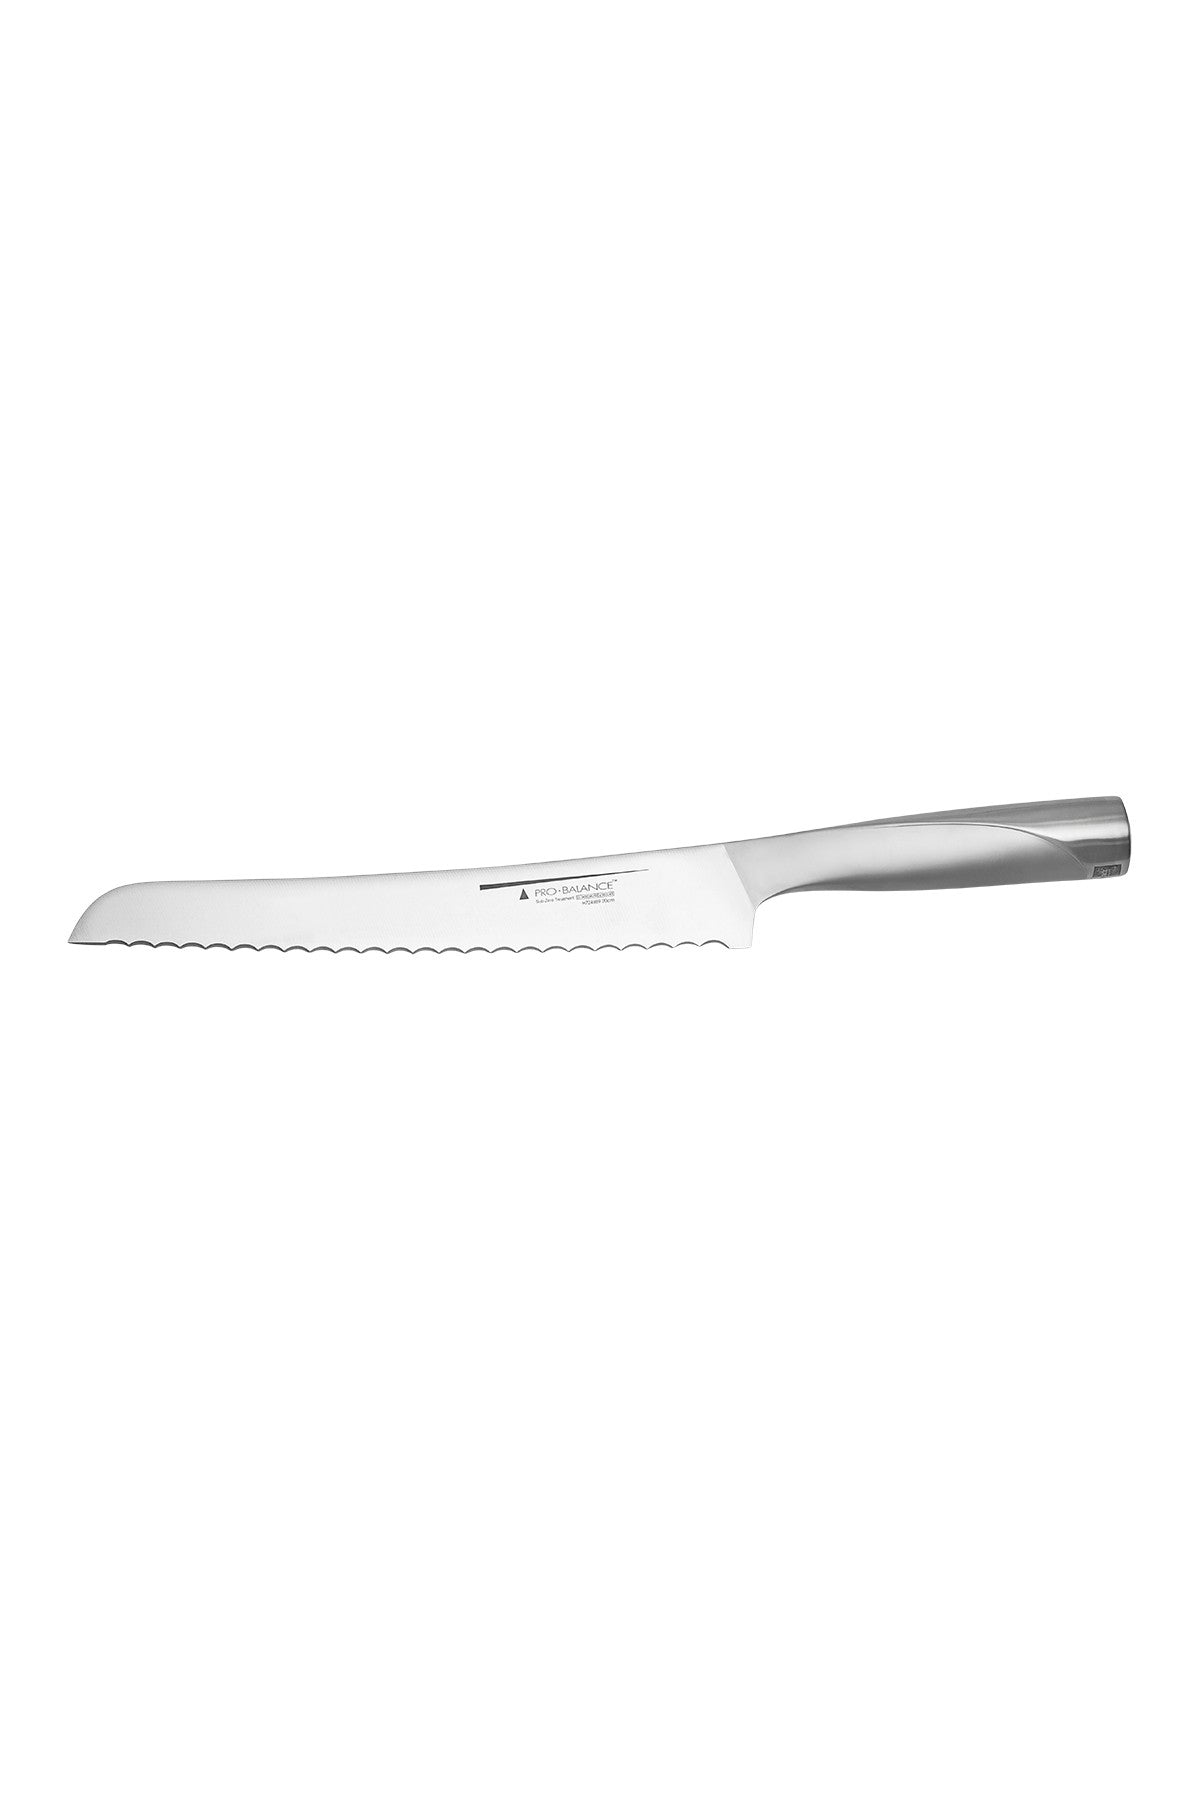 BREAD KNIFE 22 CM PRO-BALANCE